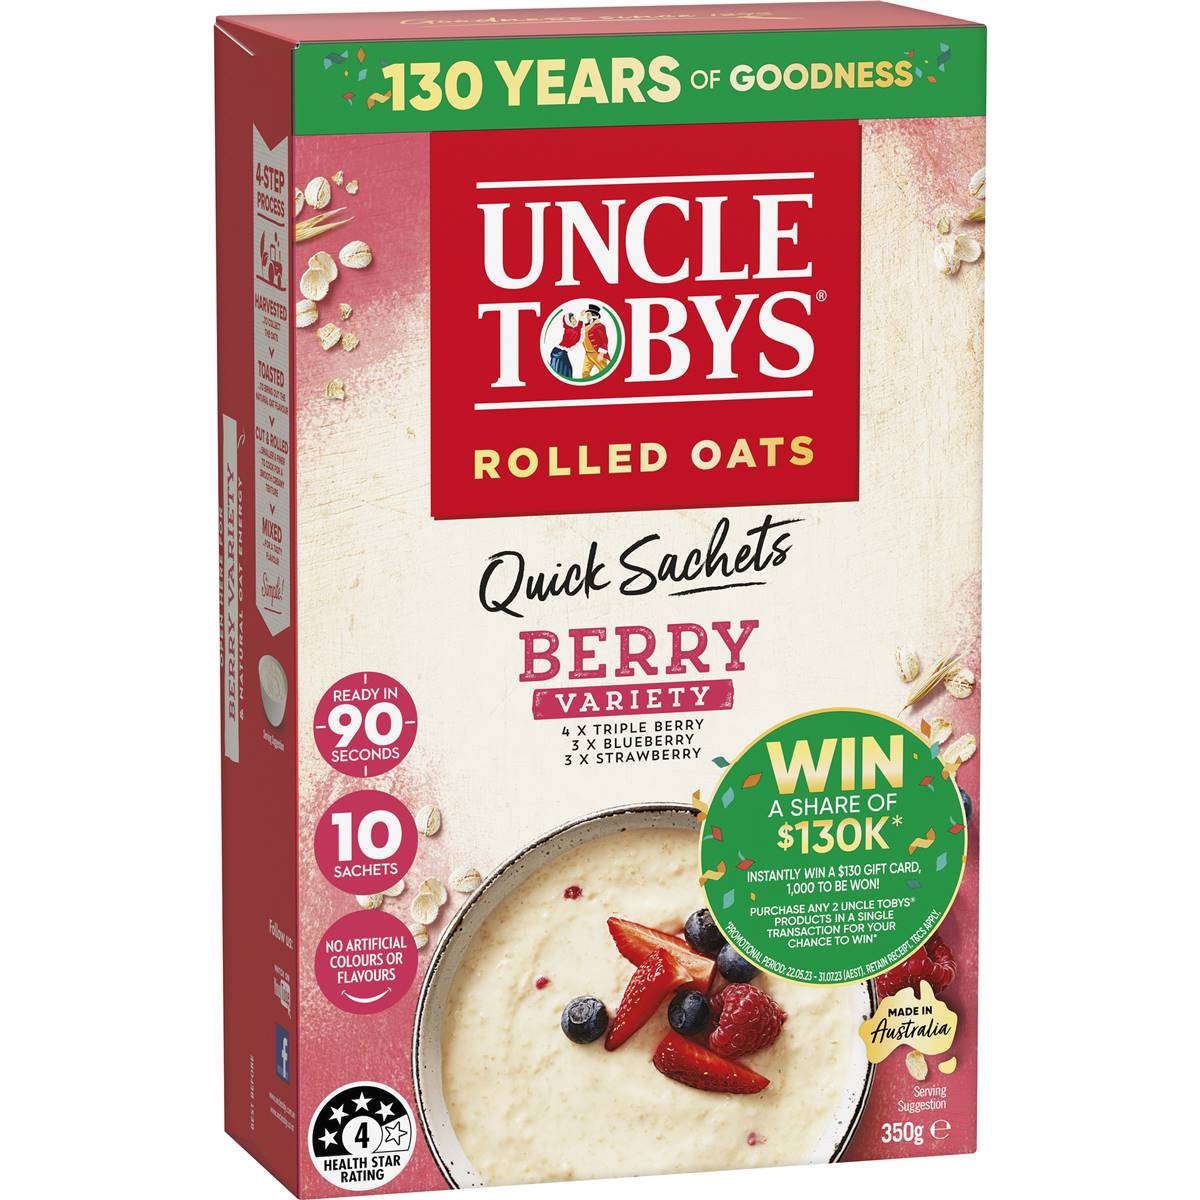 Calories in Uncle Tobys Oats Quick Sachets Berry Variety Porridge